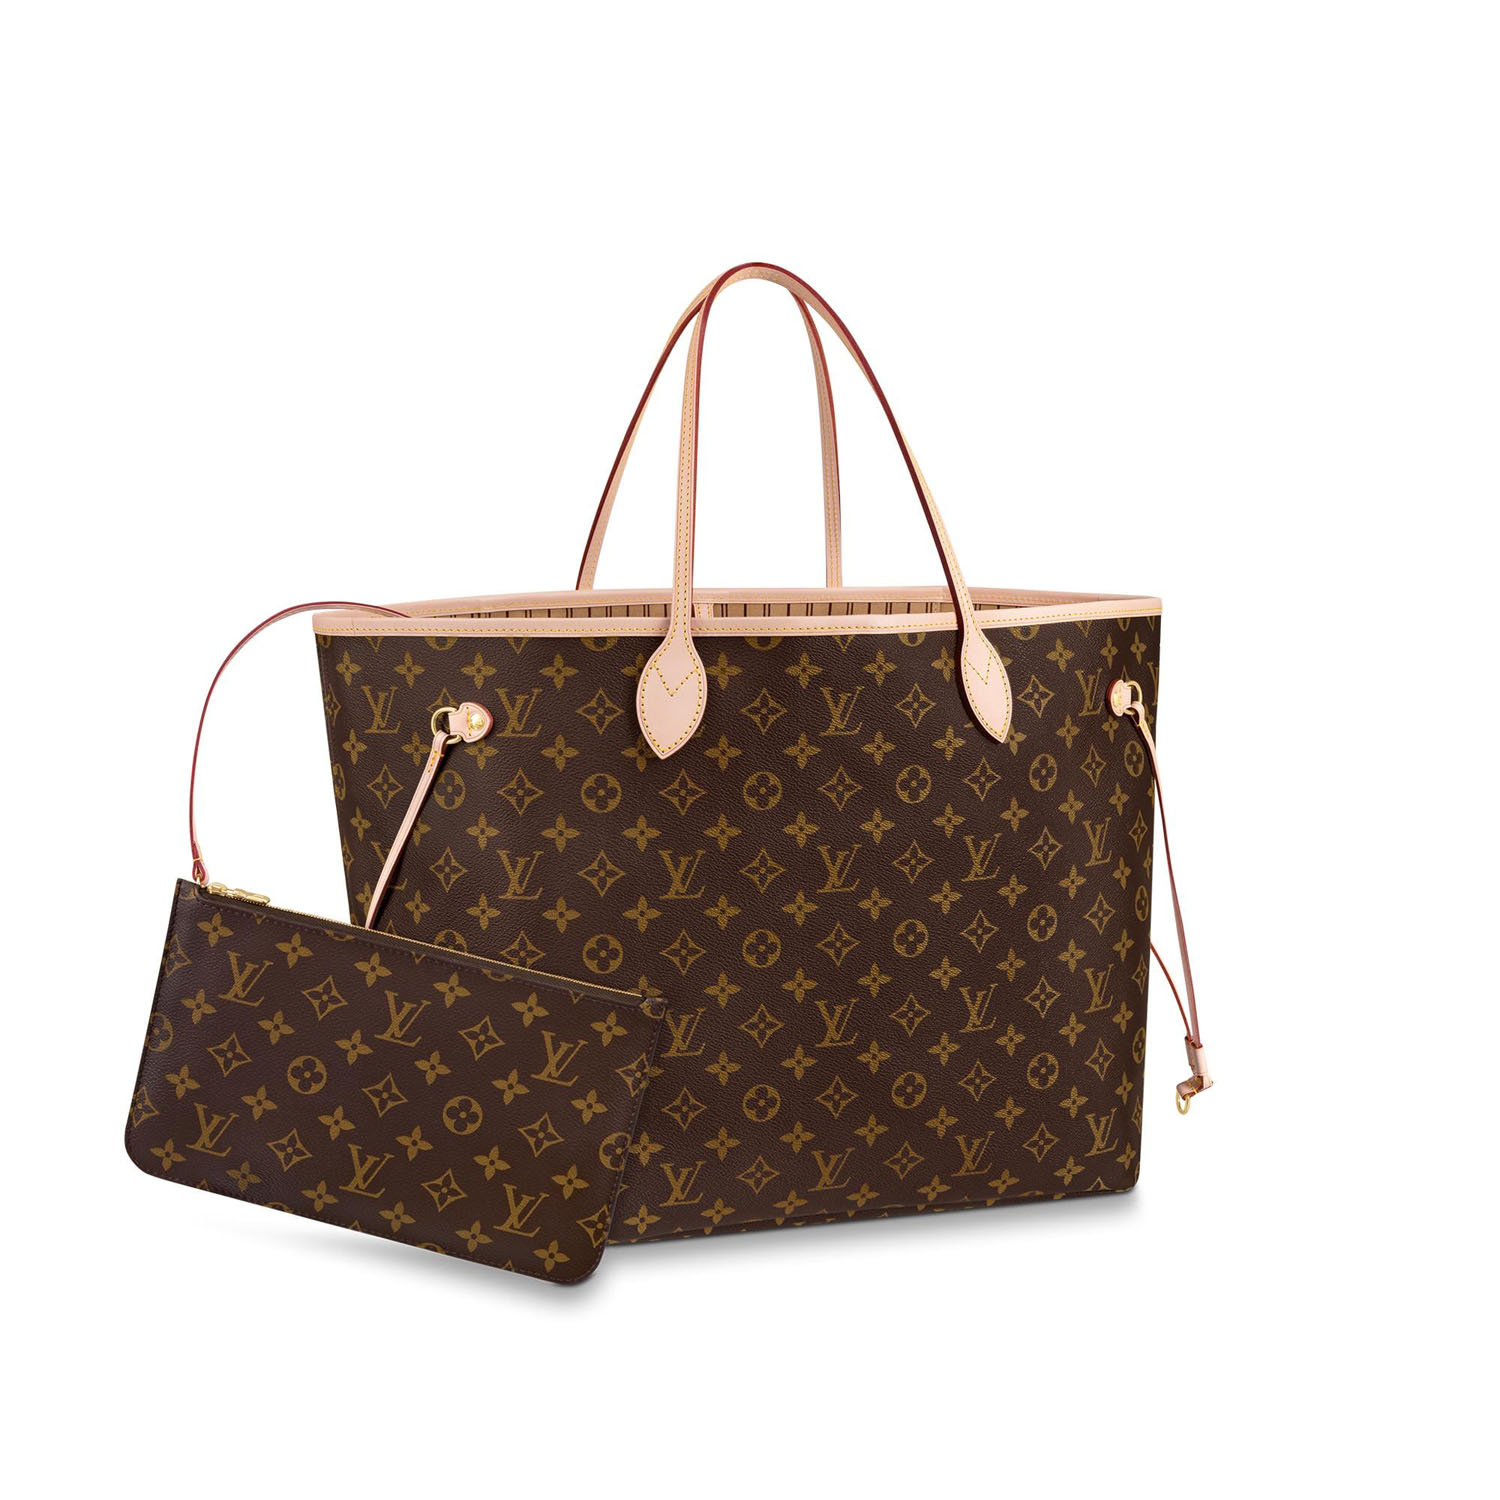 Where To Buy Louis Vuitton Bag The Cheapest  Bragmybag